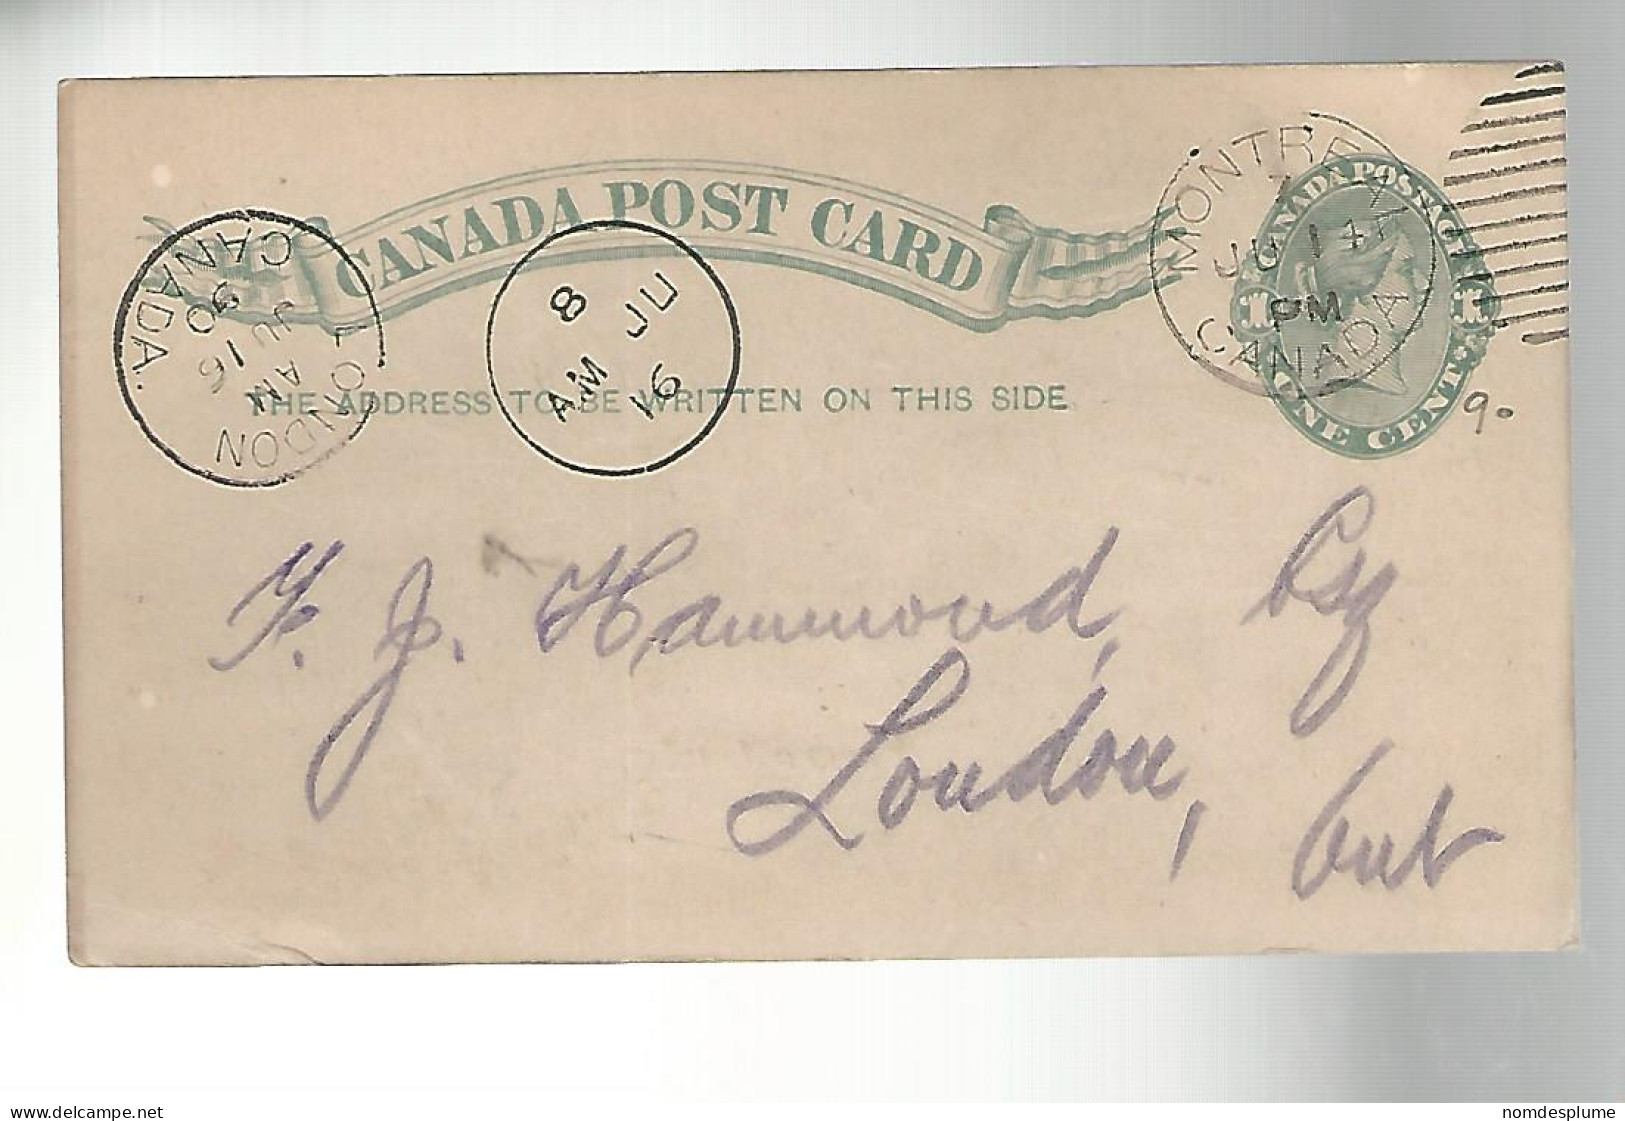 52890 ) Canada Postal Stationery Montreal London Postmarks  Duplex 1890 - 1860-1899 Regno Di Victoria